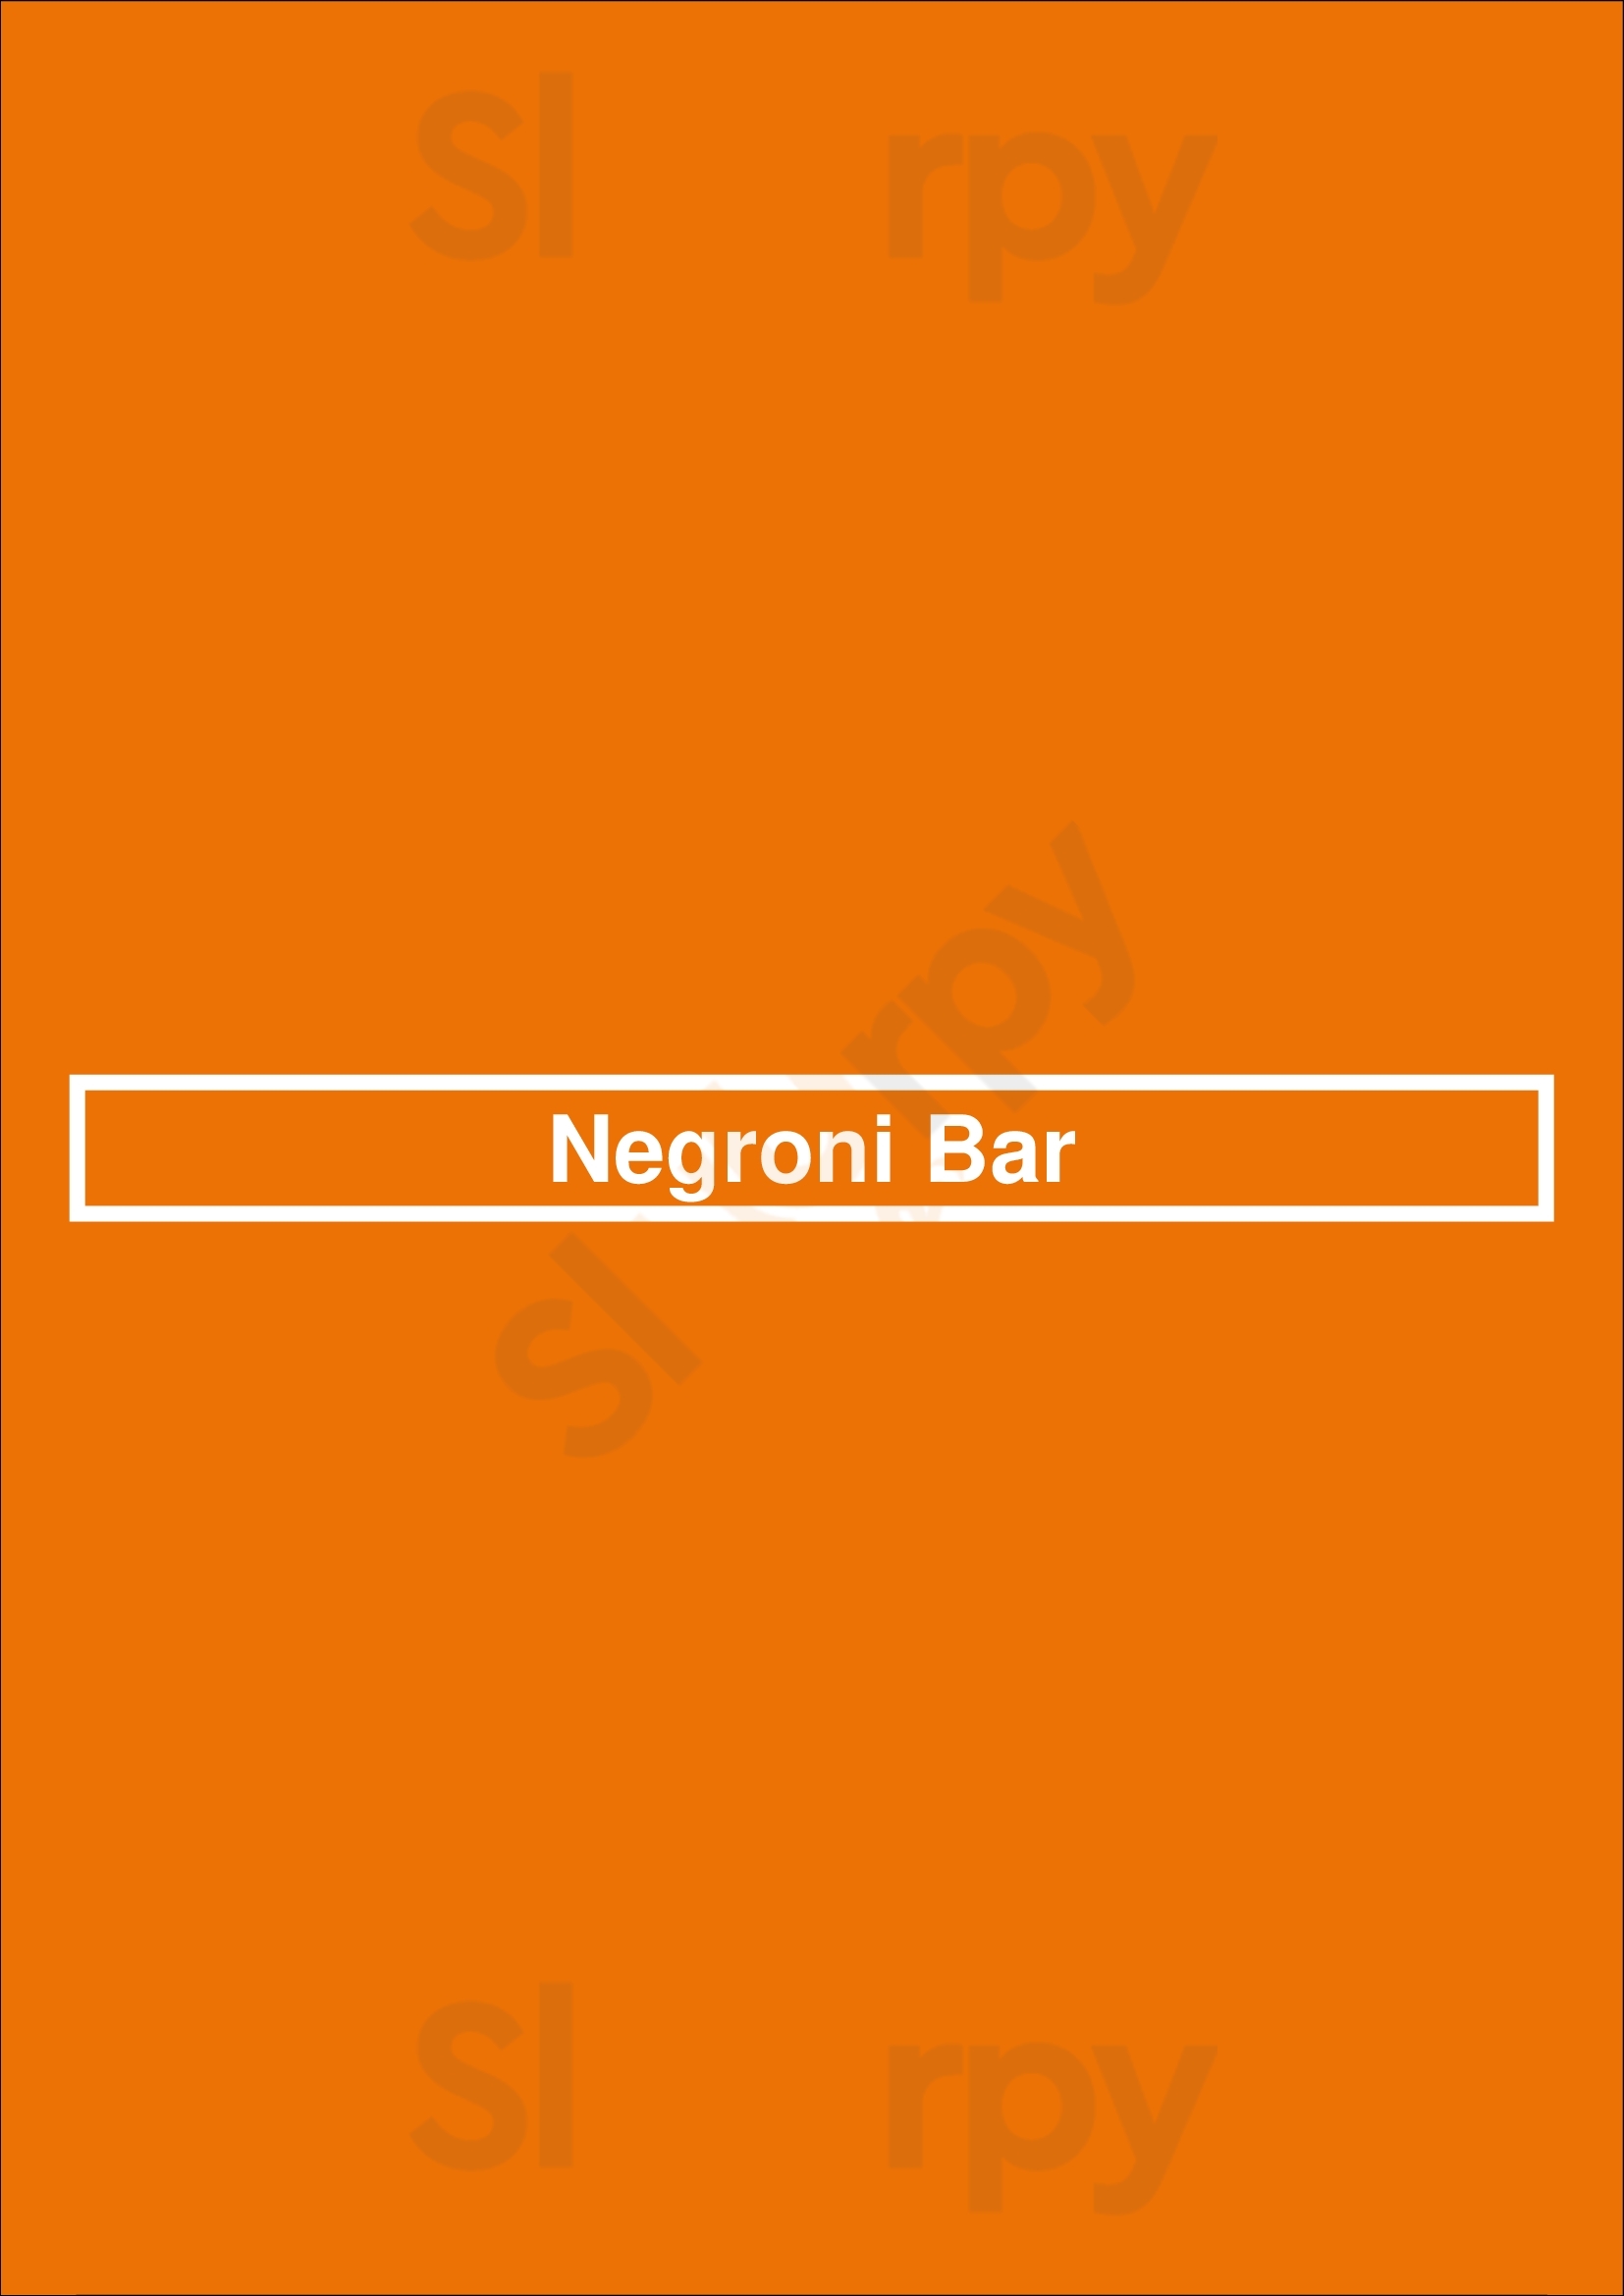 Negroni Bar München Menu - 1